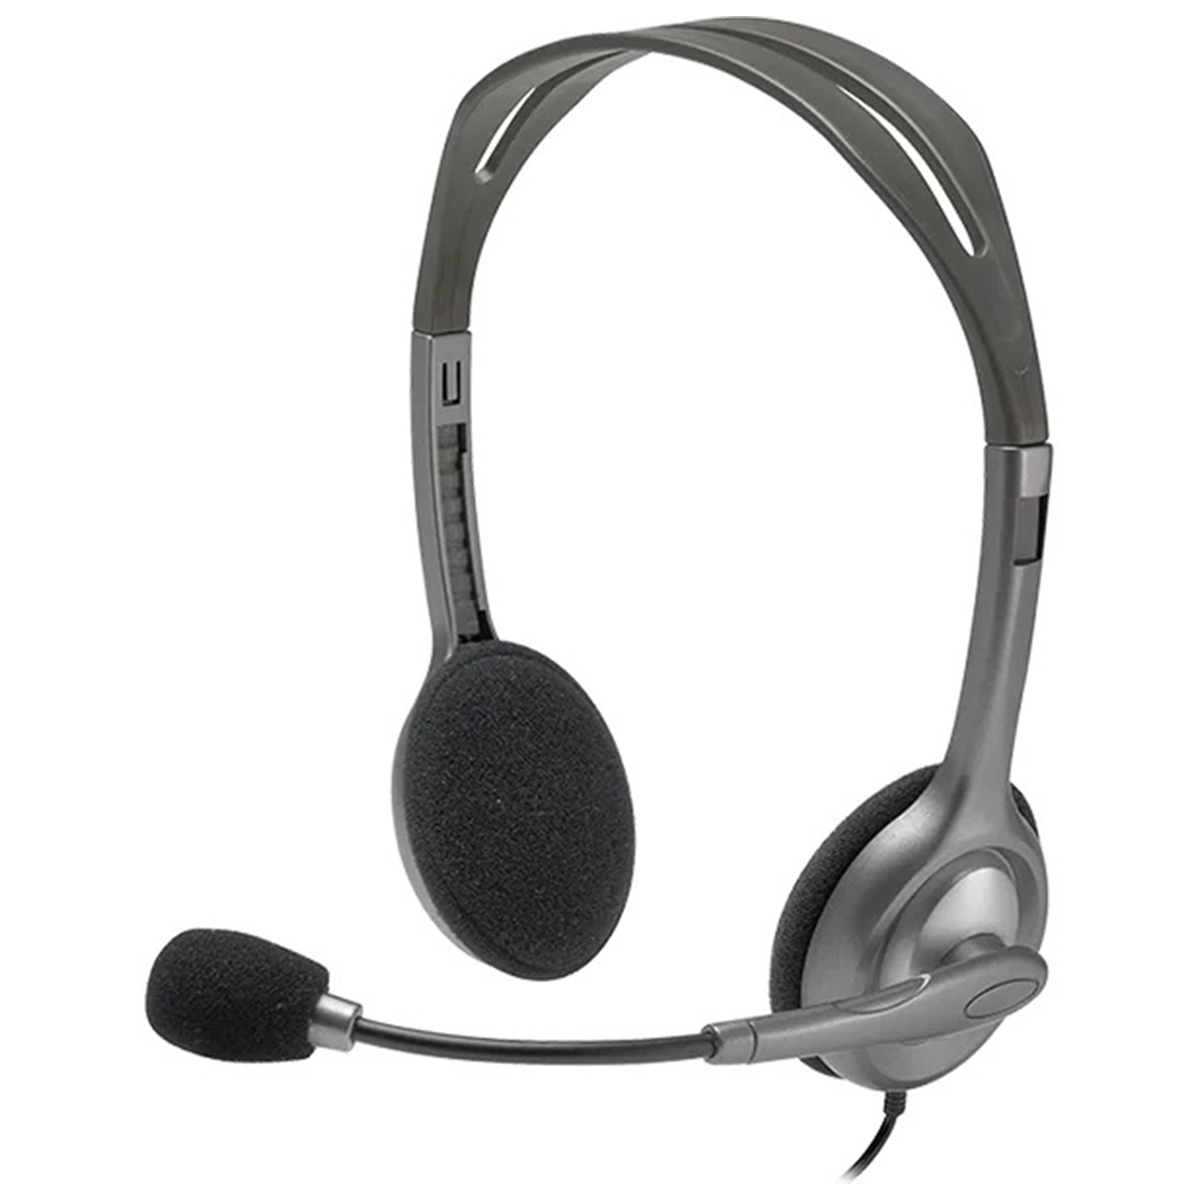 Casti On Ear Logitech H110 Stereo, 3.5mm, Dual Plug, Gri